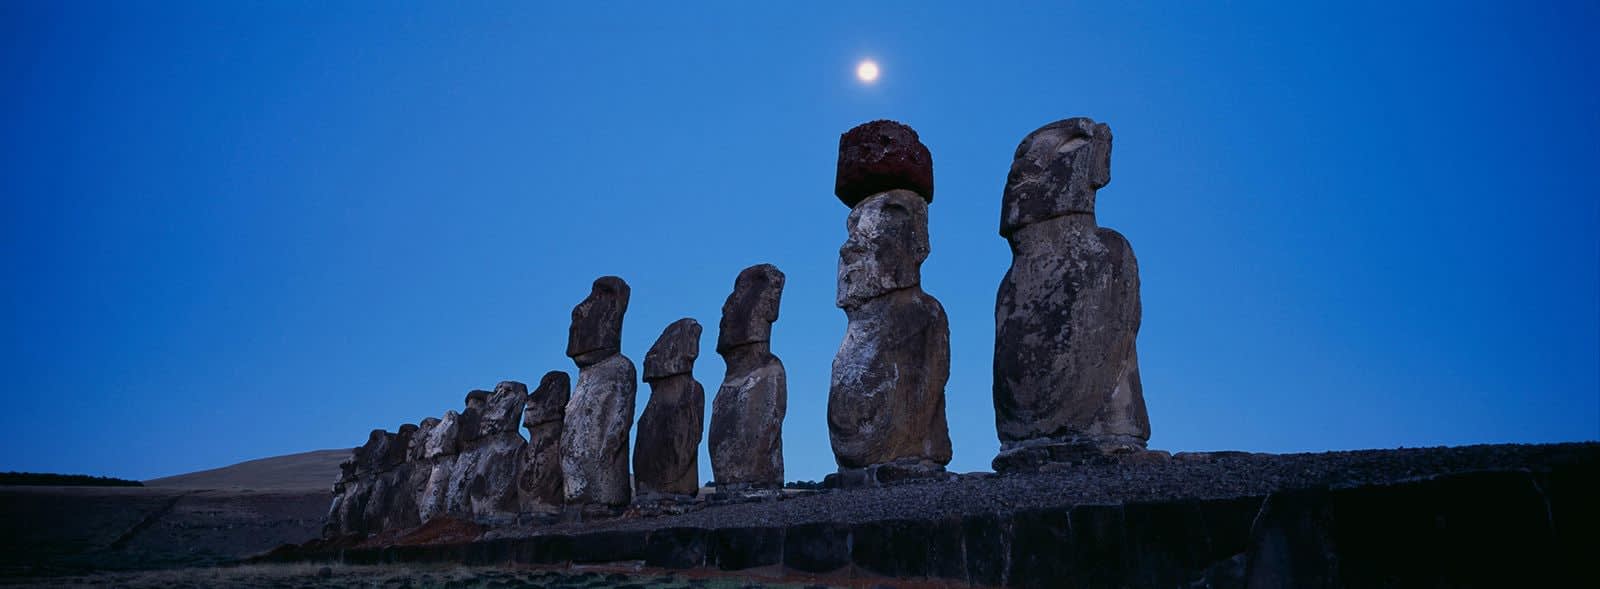 Matjaž Krivic, Easter island Moai, 2002 – 2006